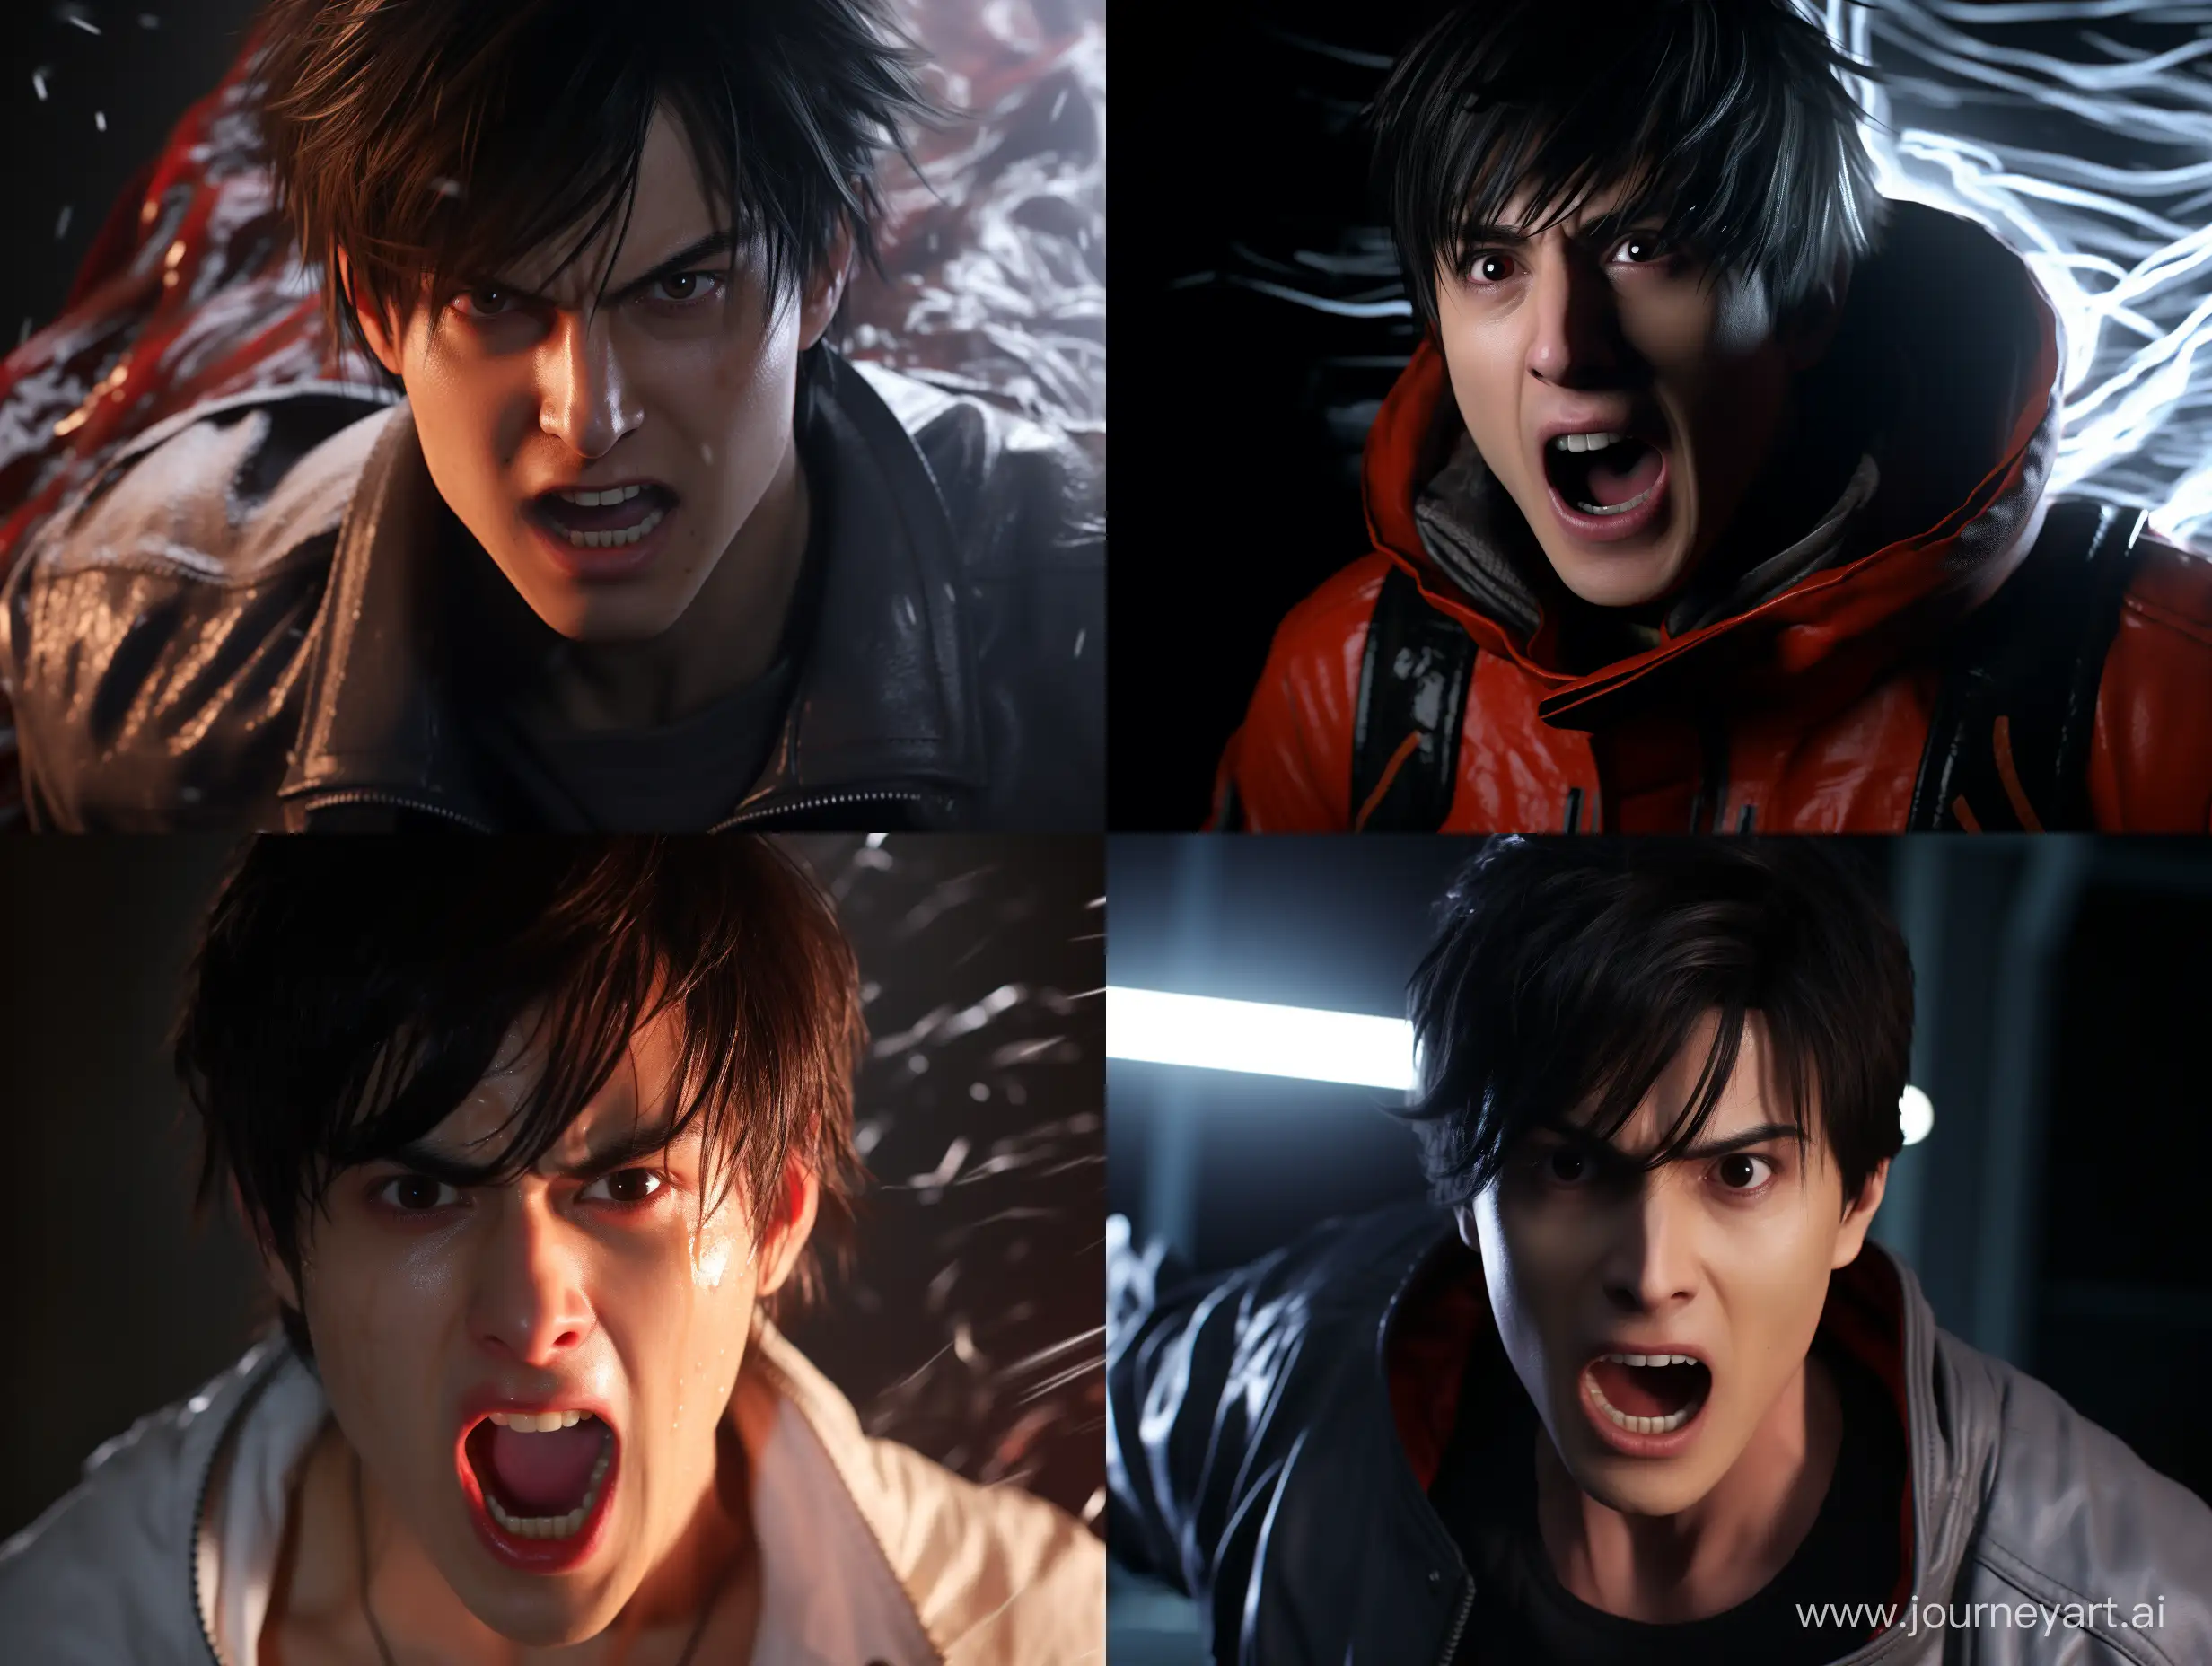 Tekken-8-Character-Jin-Kazamas-Hilarious-Facial-Expression-in-Dramatic-Lighting